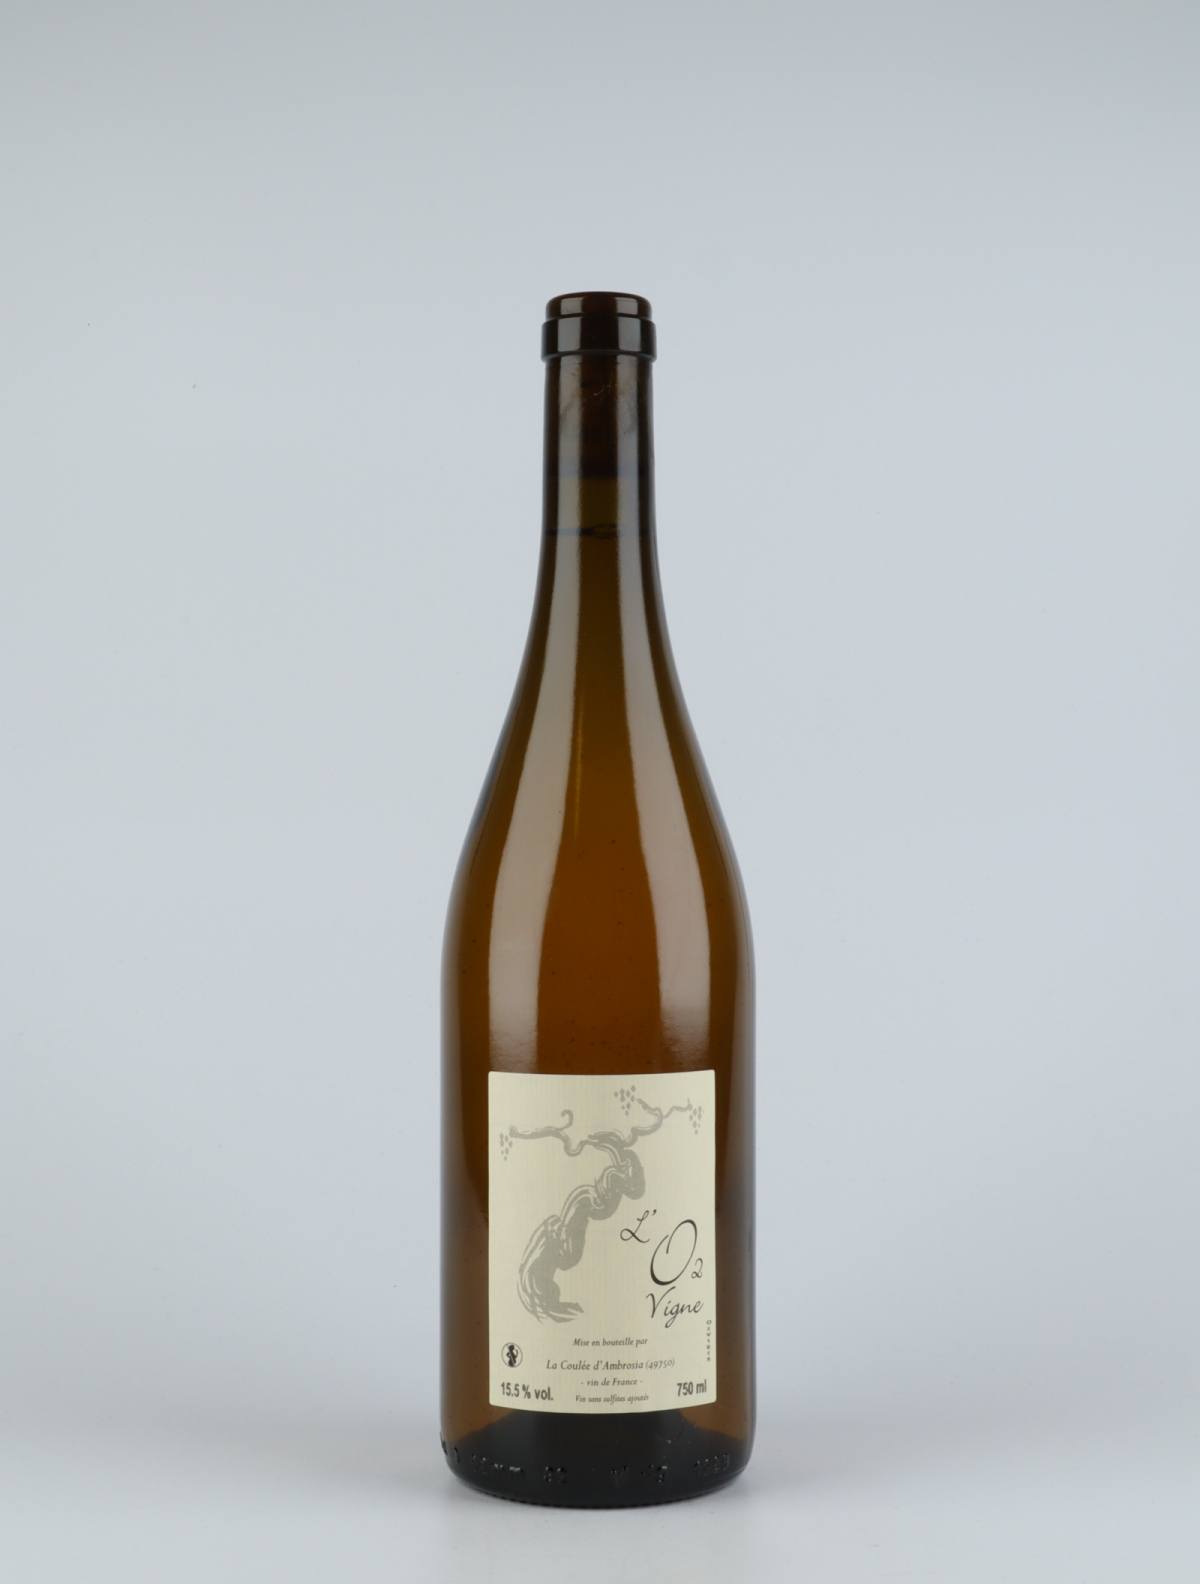 A bottle 2010 O2 Vigne White wine from Jean-Francois Chene, Loire in France